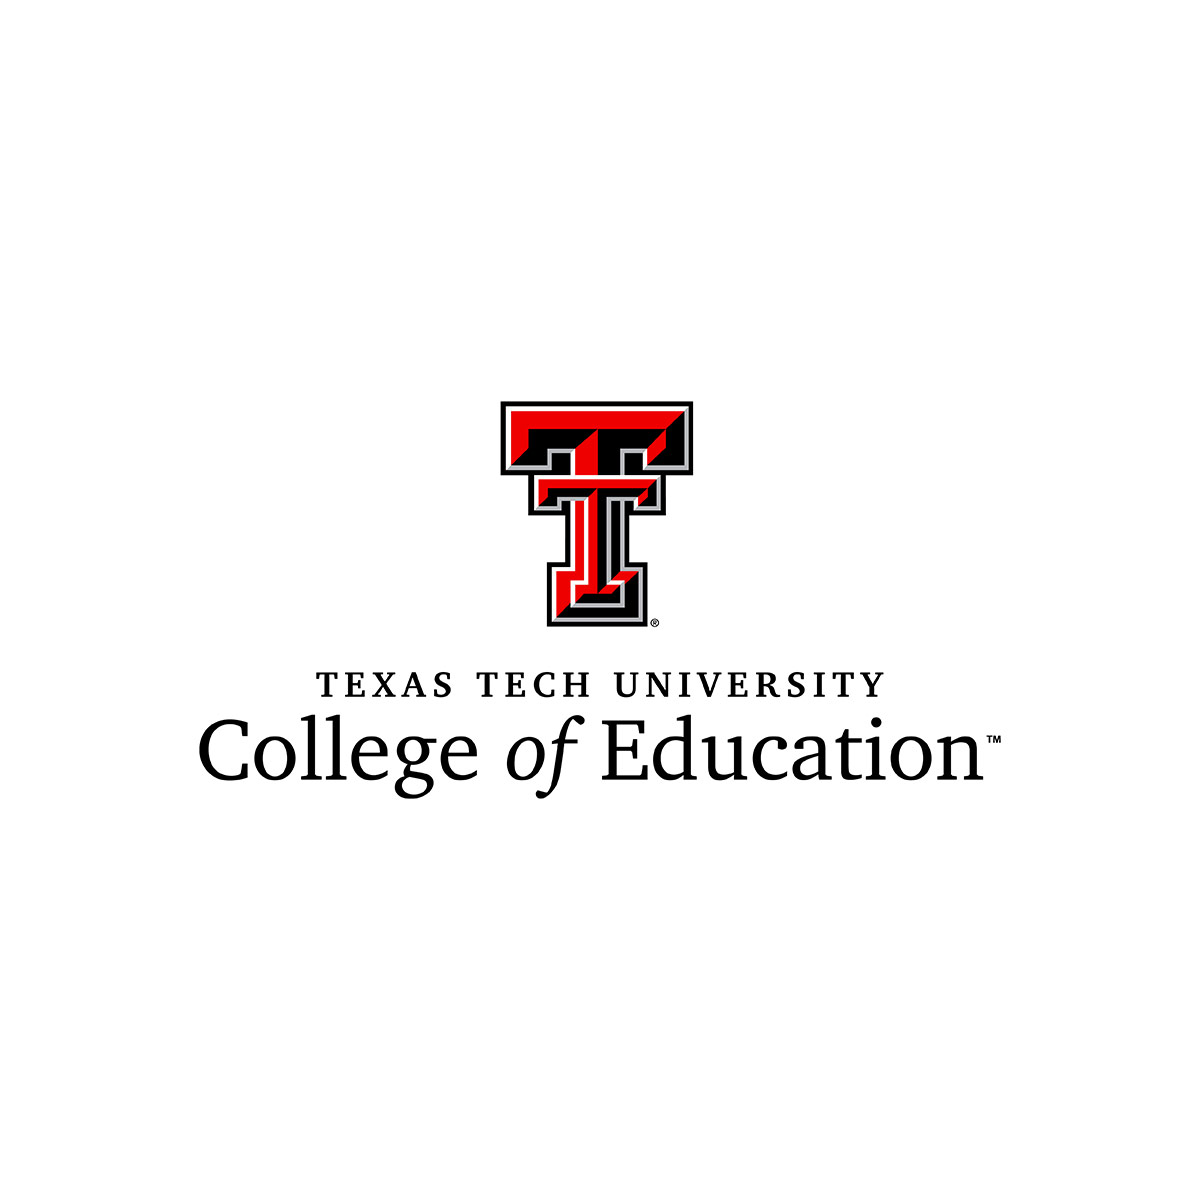 Texas Tech University College of Education square logo